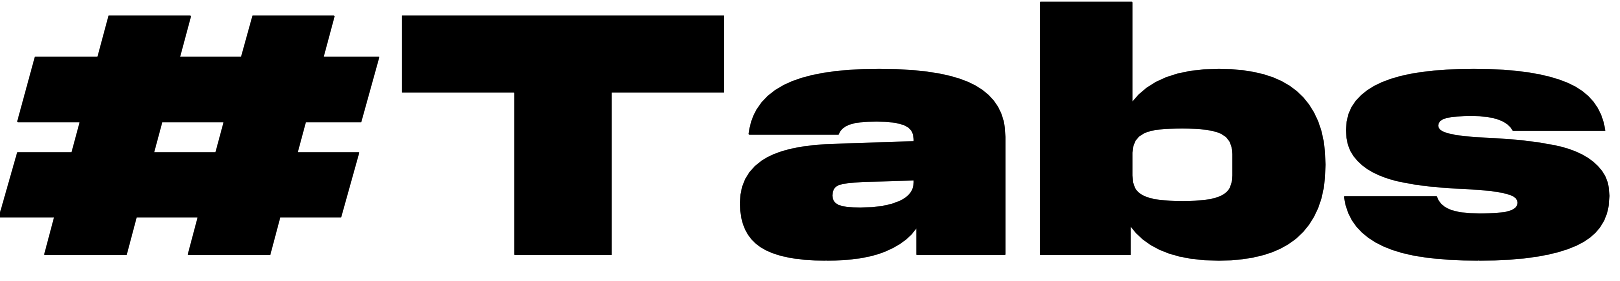 logo_text_dark